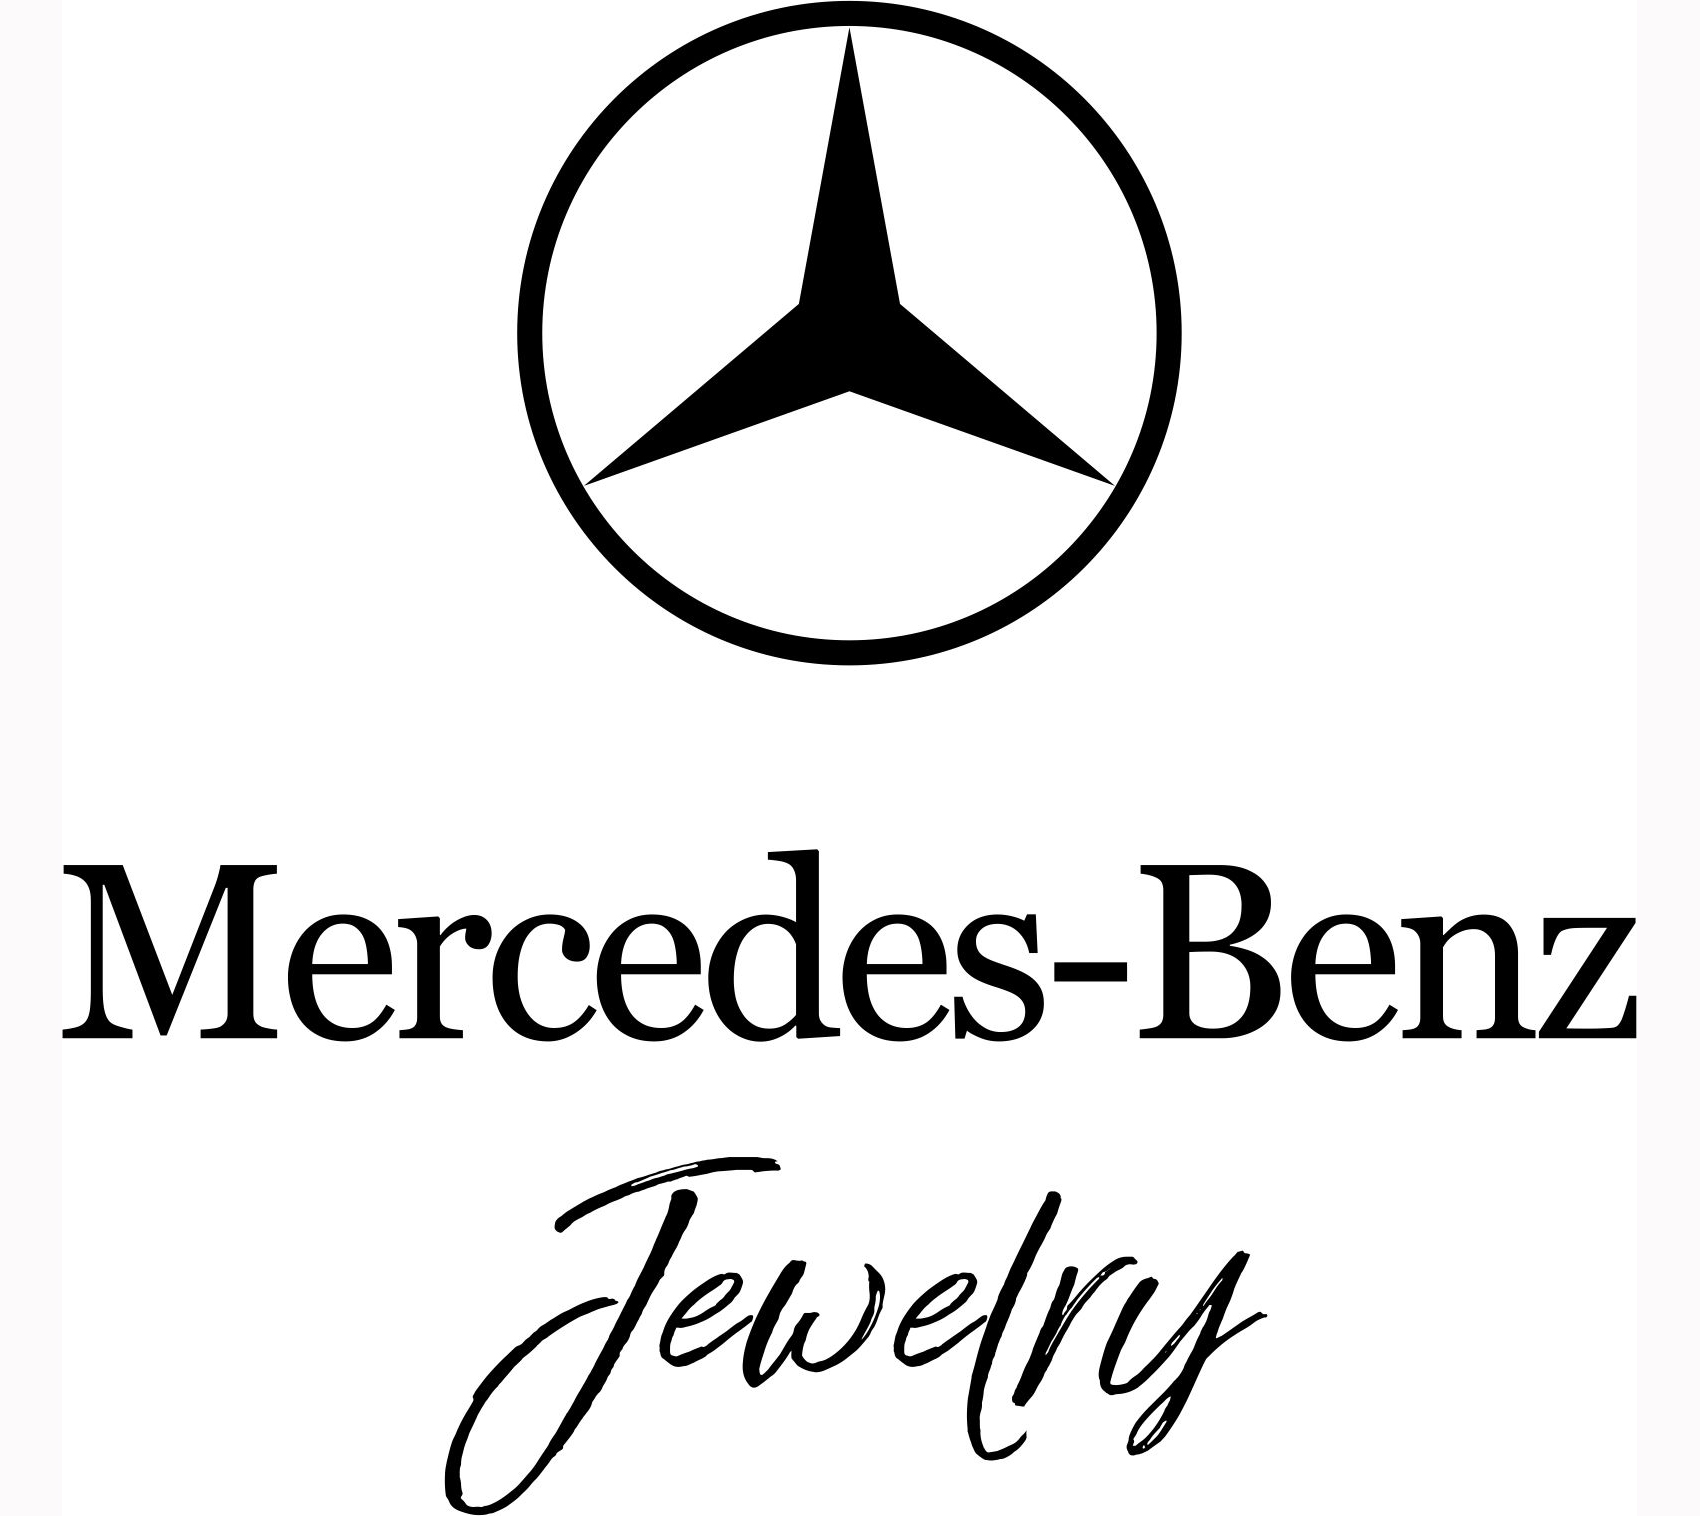 Mercedes-Benz Jewelry